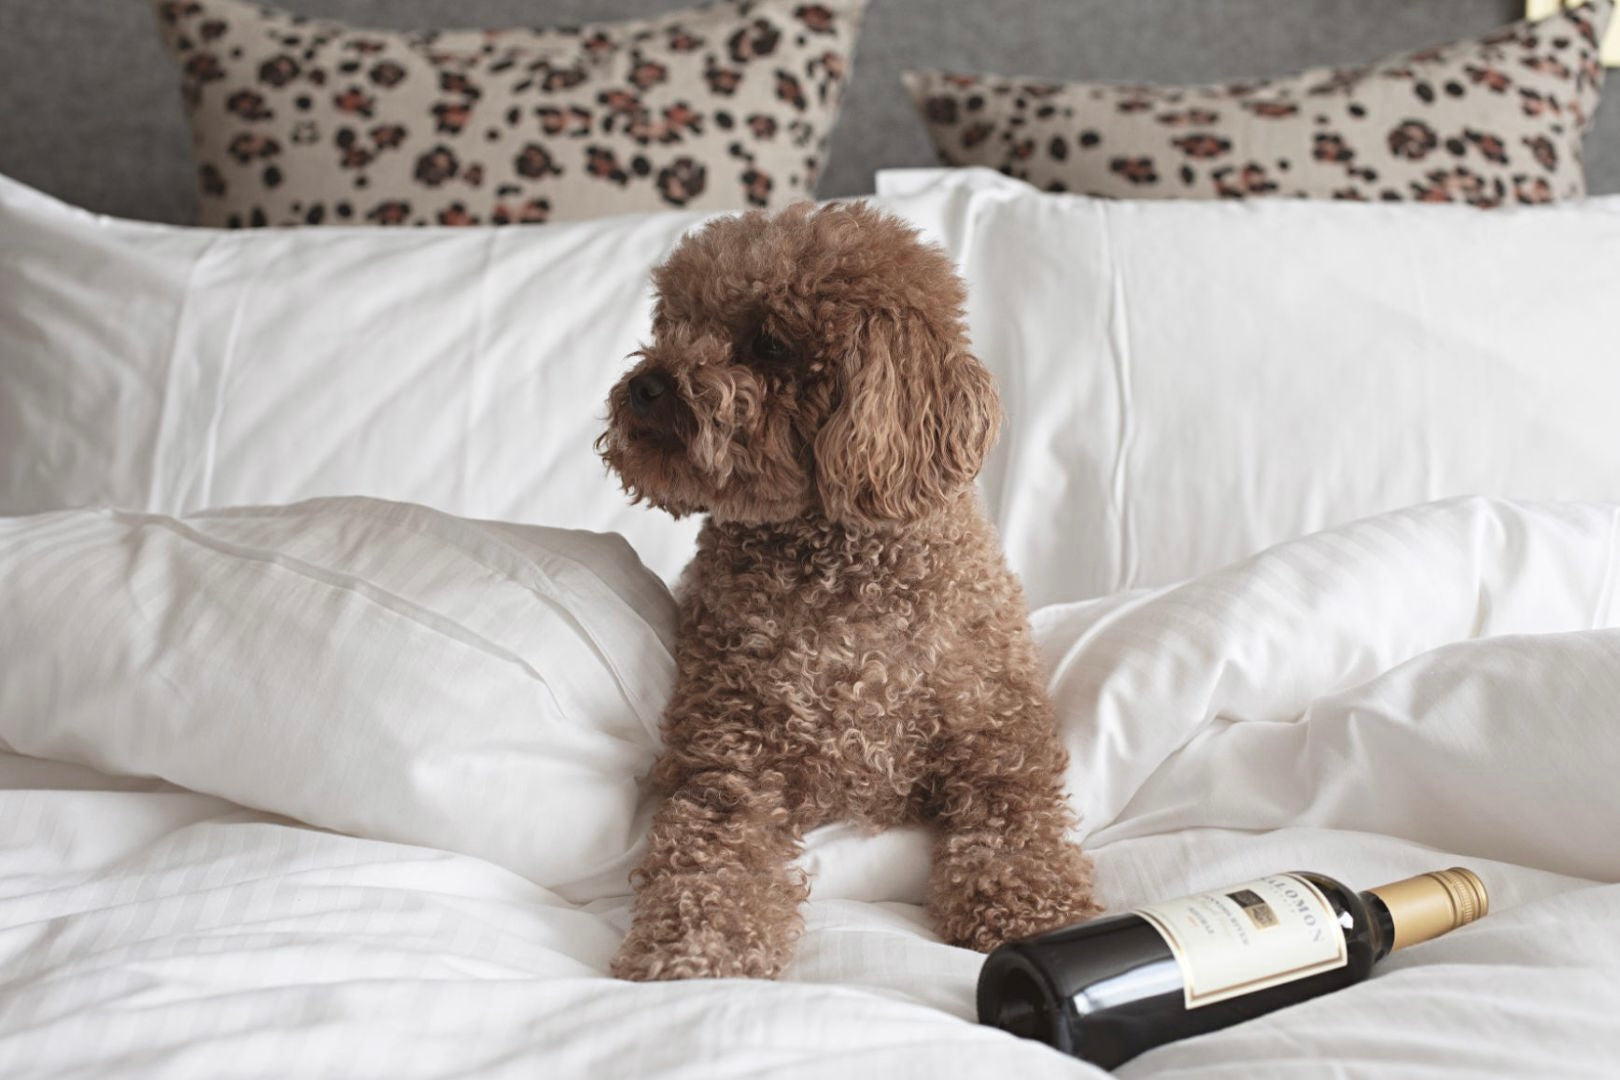 Bourke St the Label Dog Friendly Hotels in Melbourne Blog Post